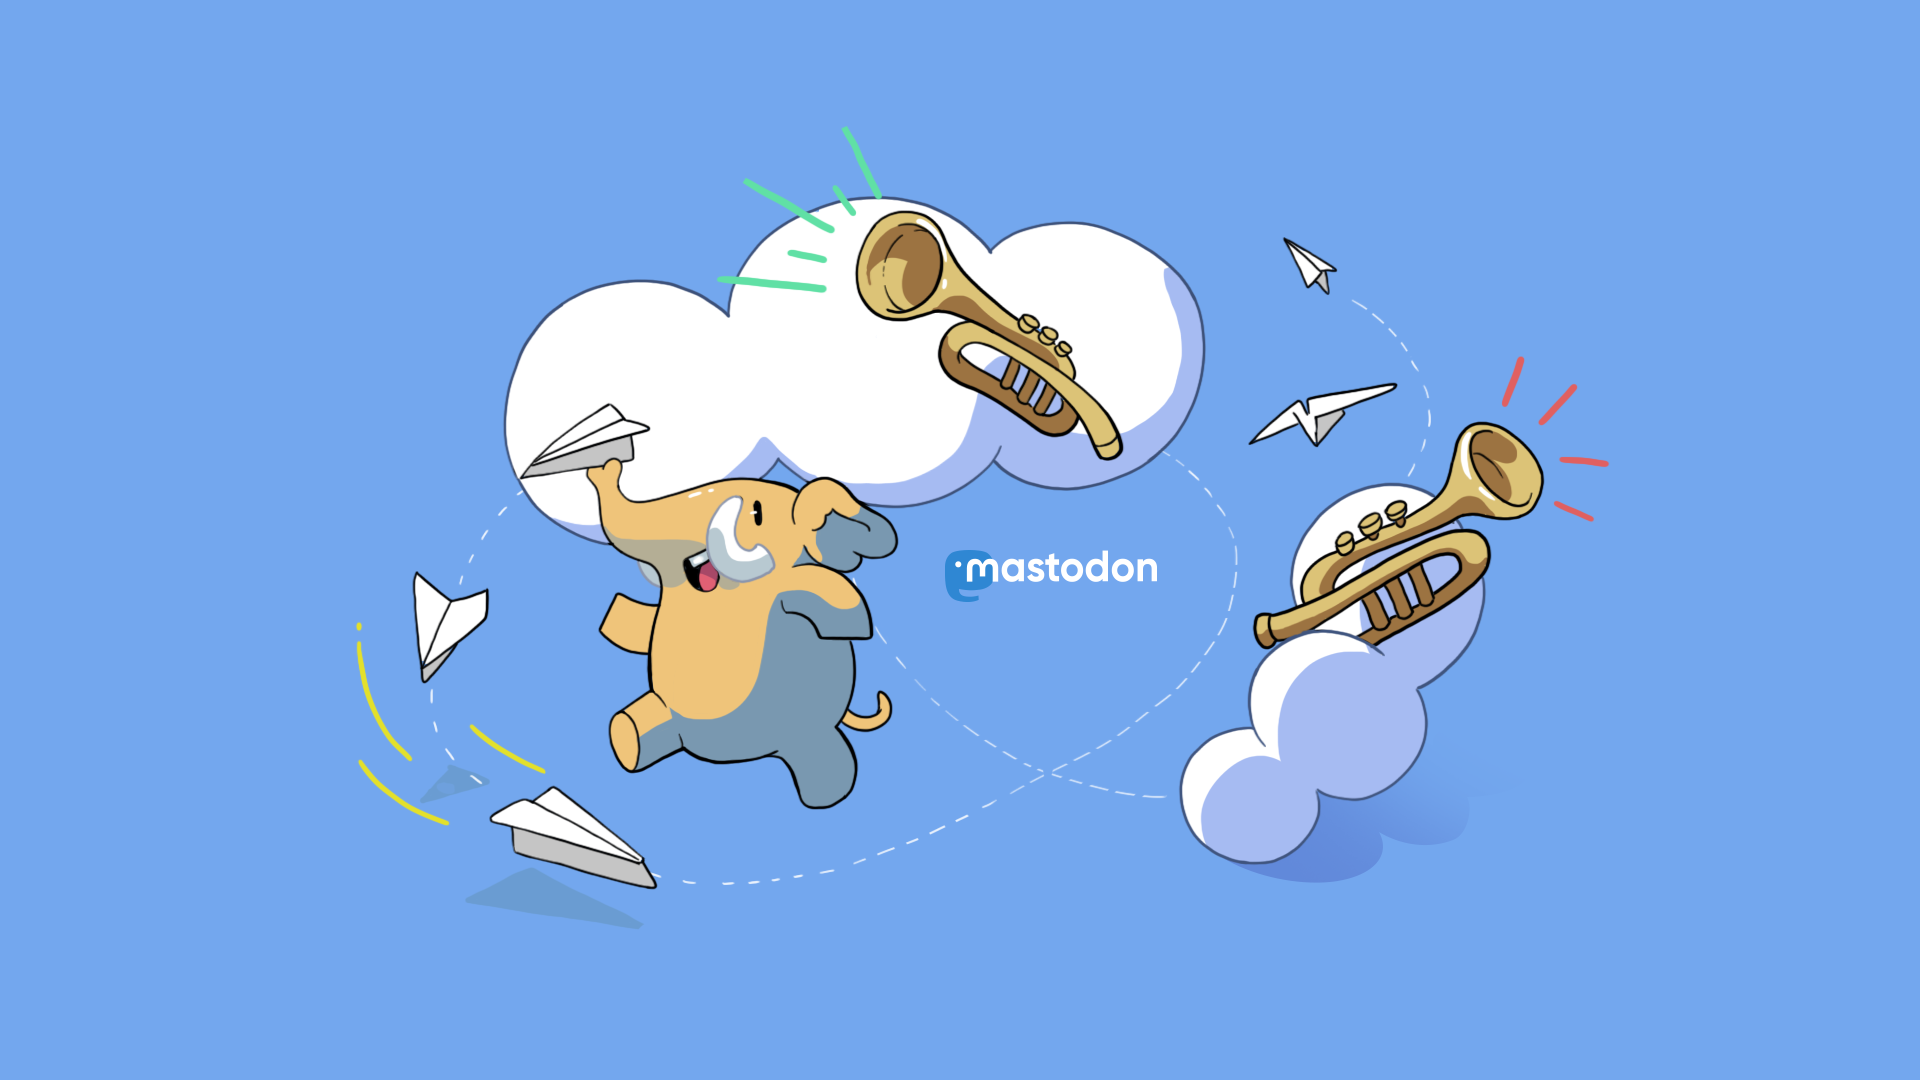 Mastodon mascot running around a cloud